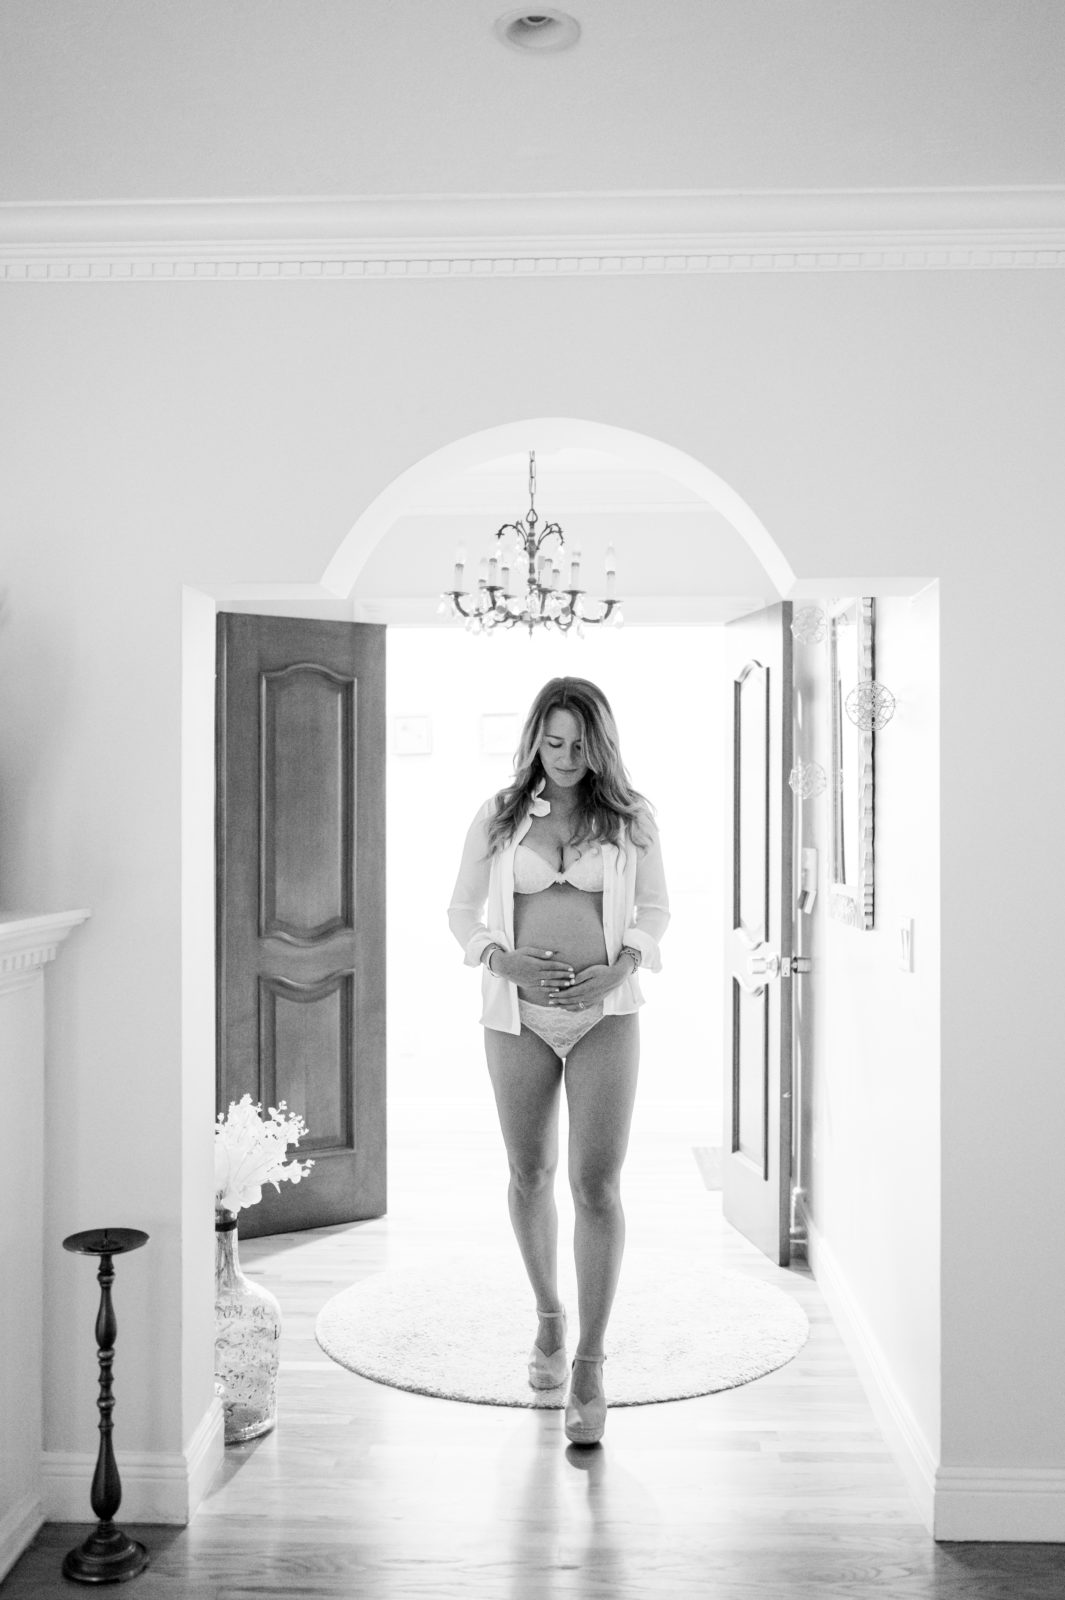 At home maternity photos | Coral Gables